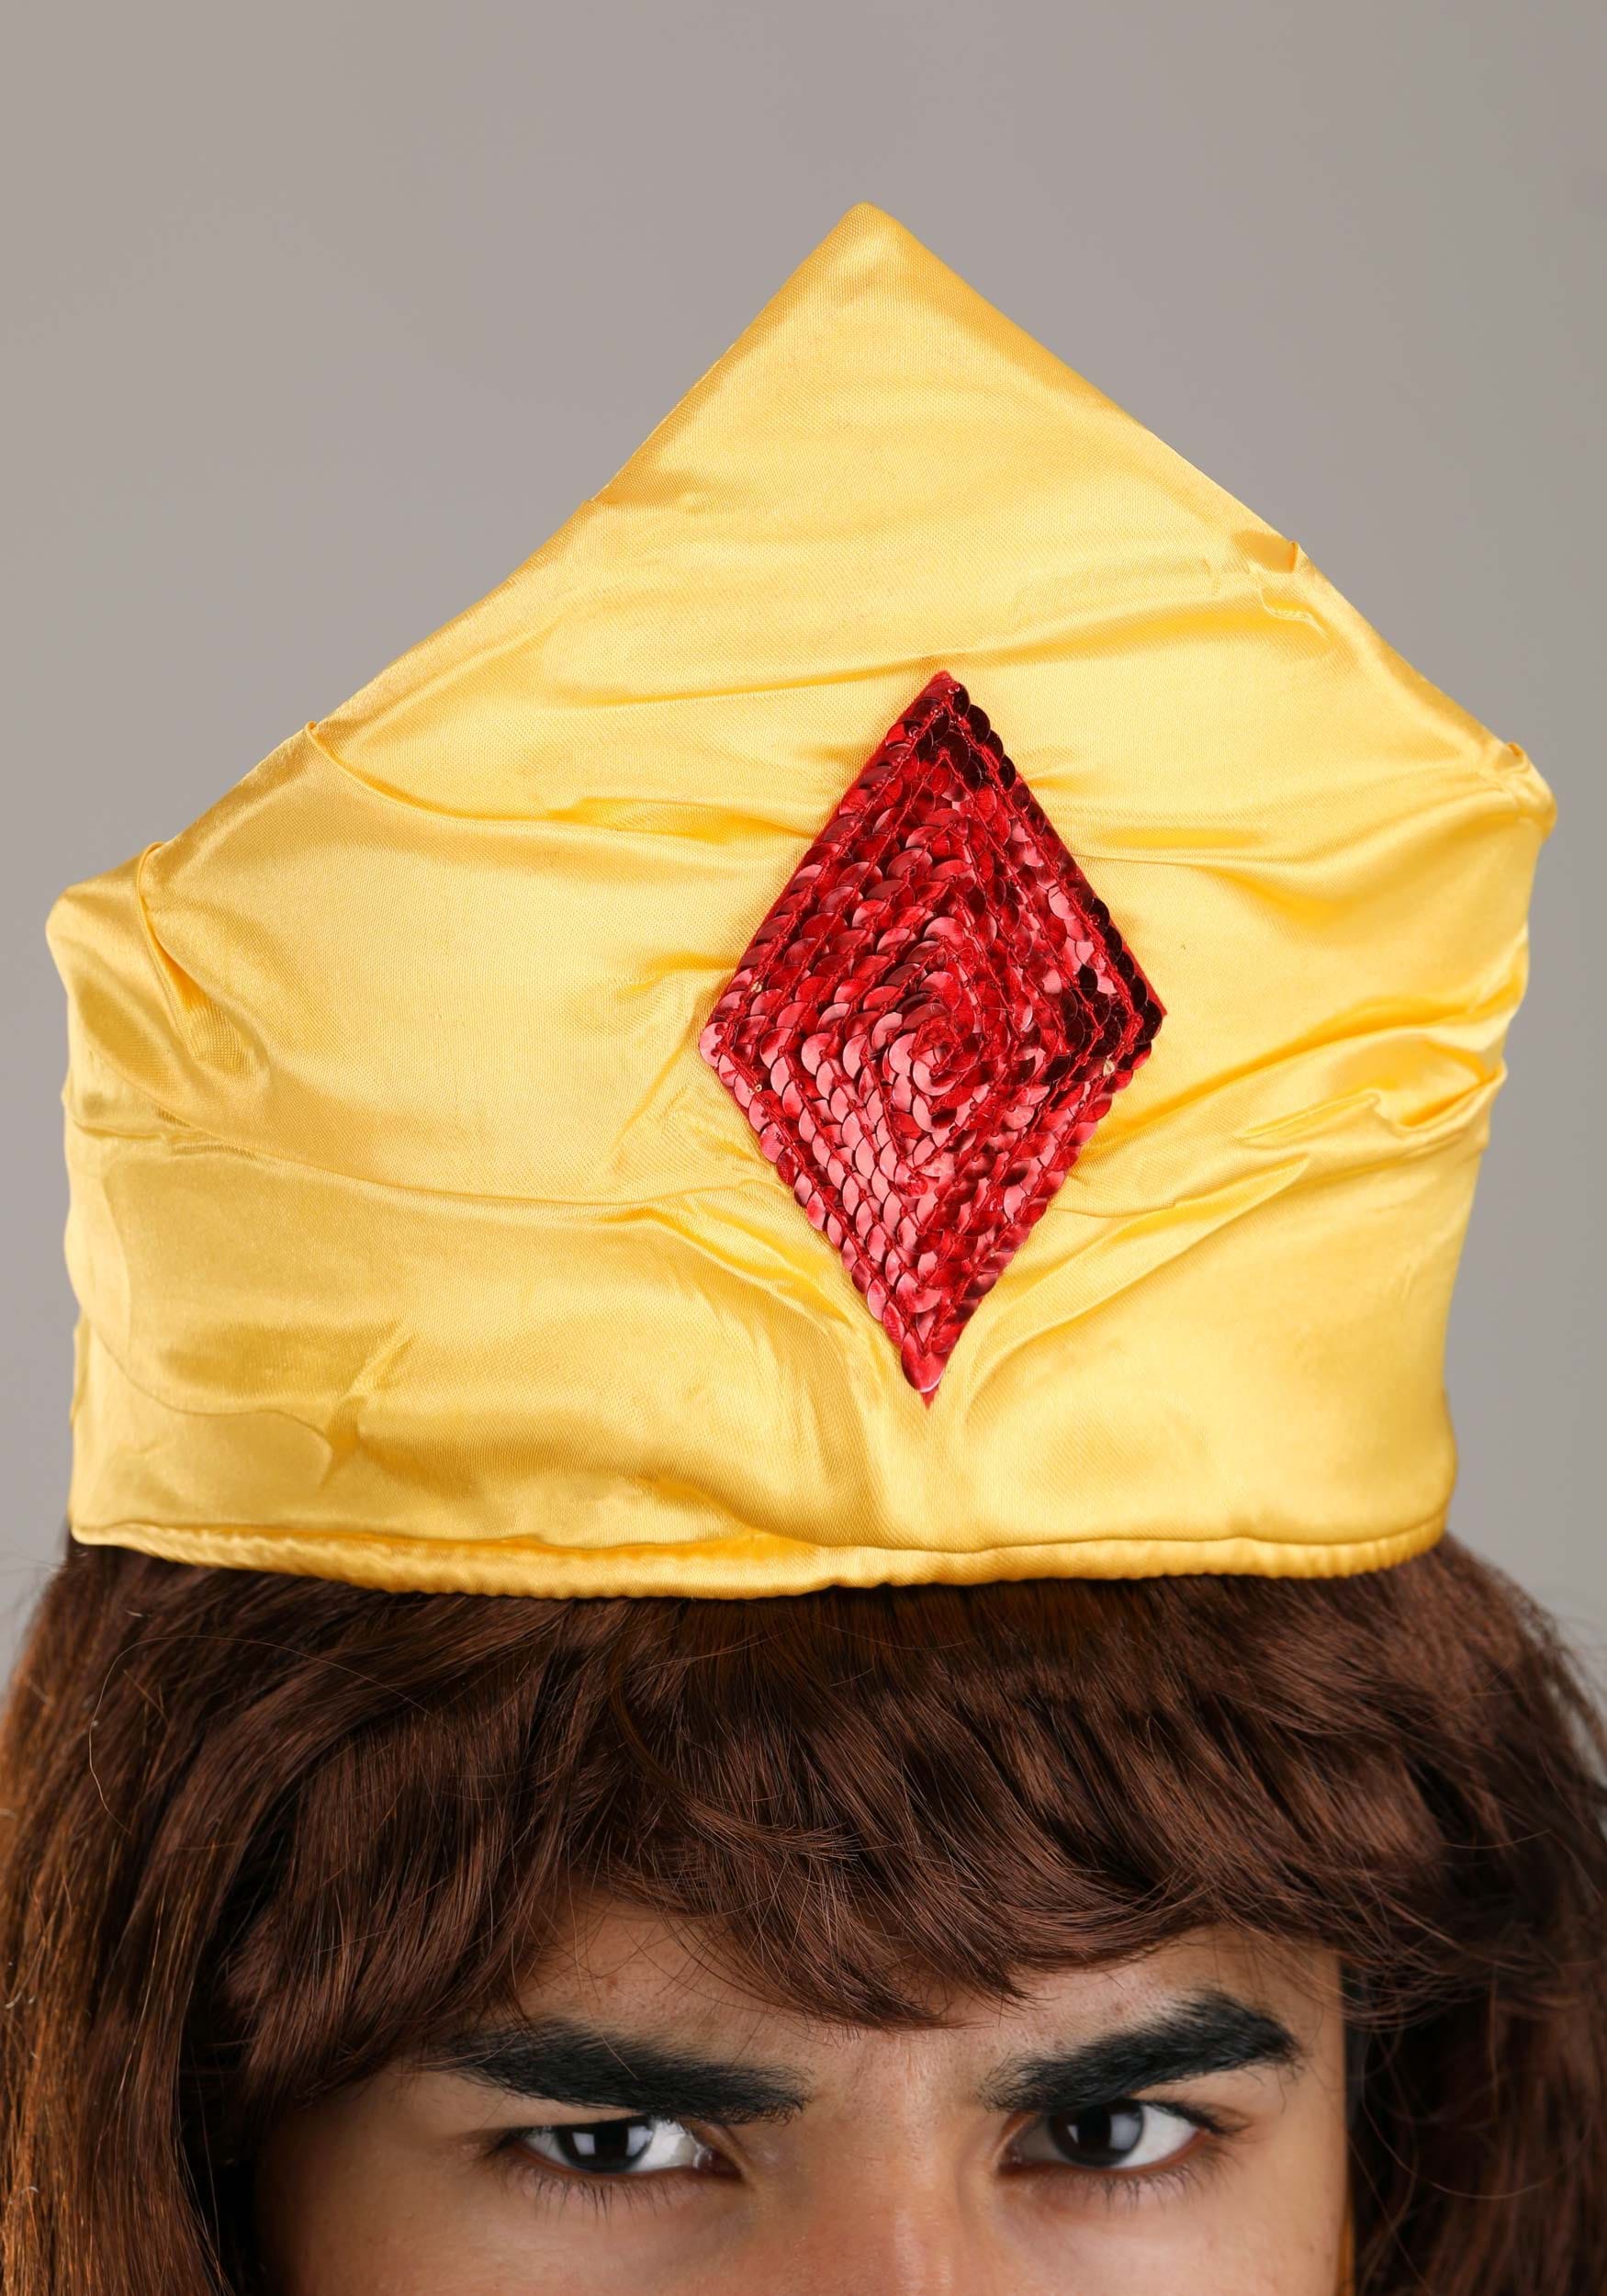 Haman Purim Costume For Adults